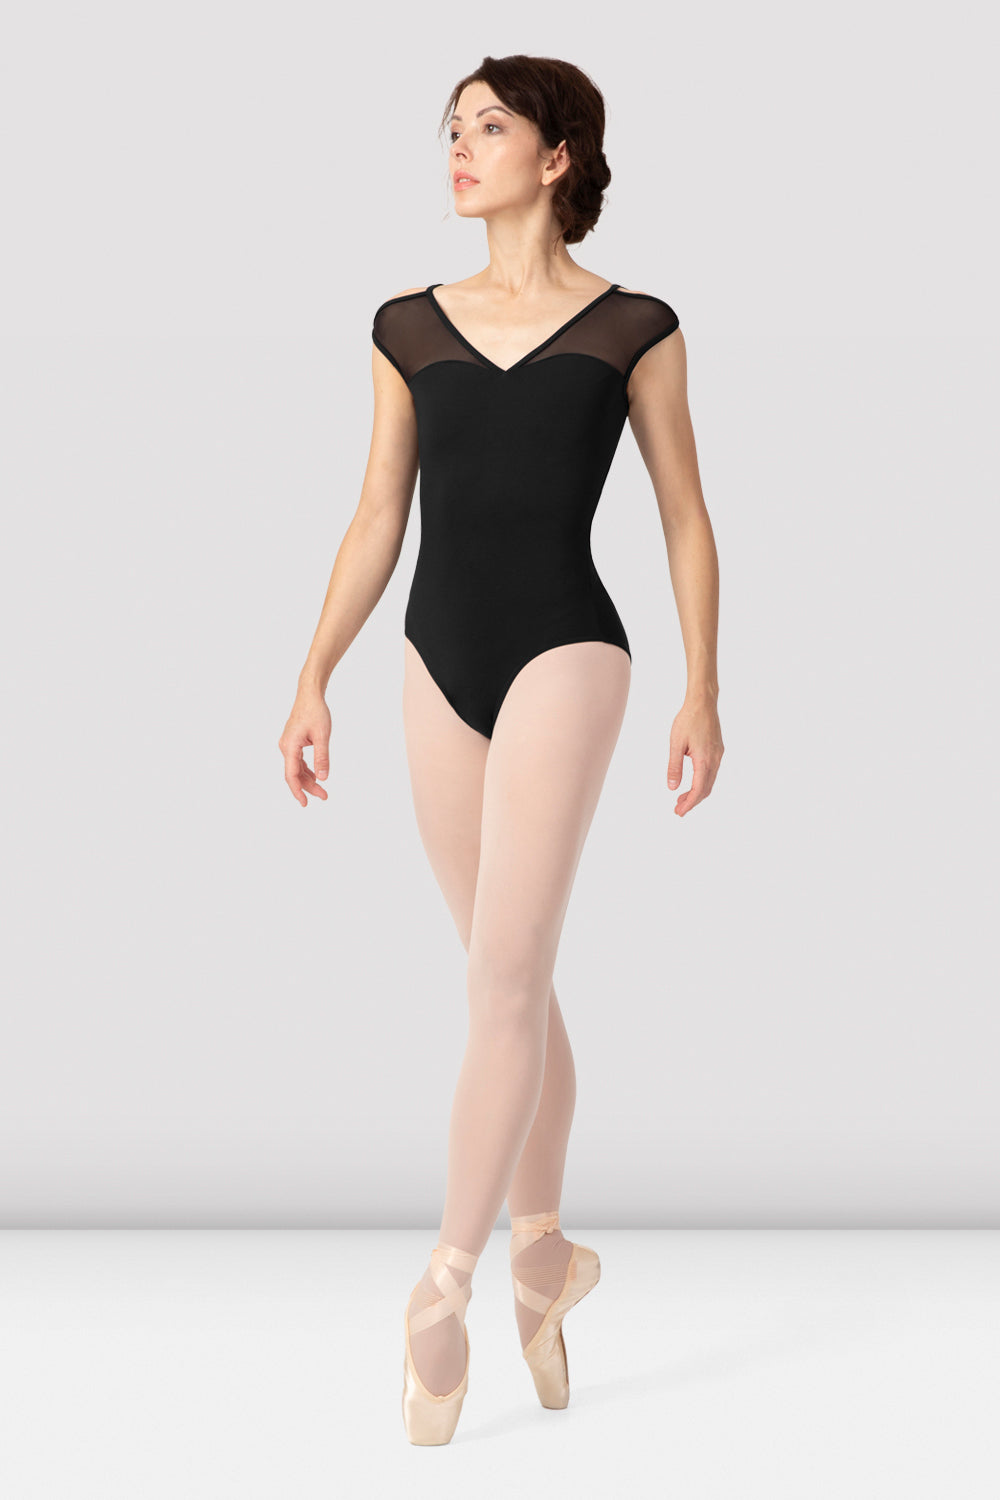 Ballet Dance Leotard  Black Lace Tank Leotard For Womens - Fix